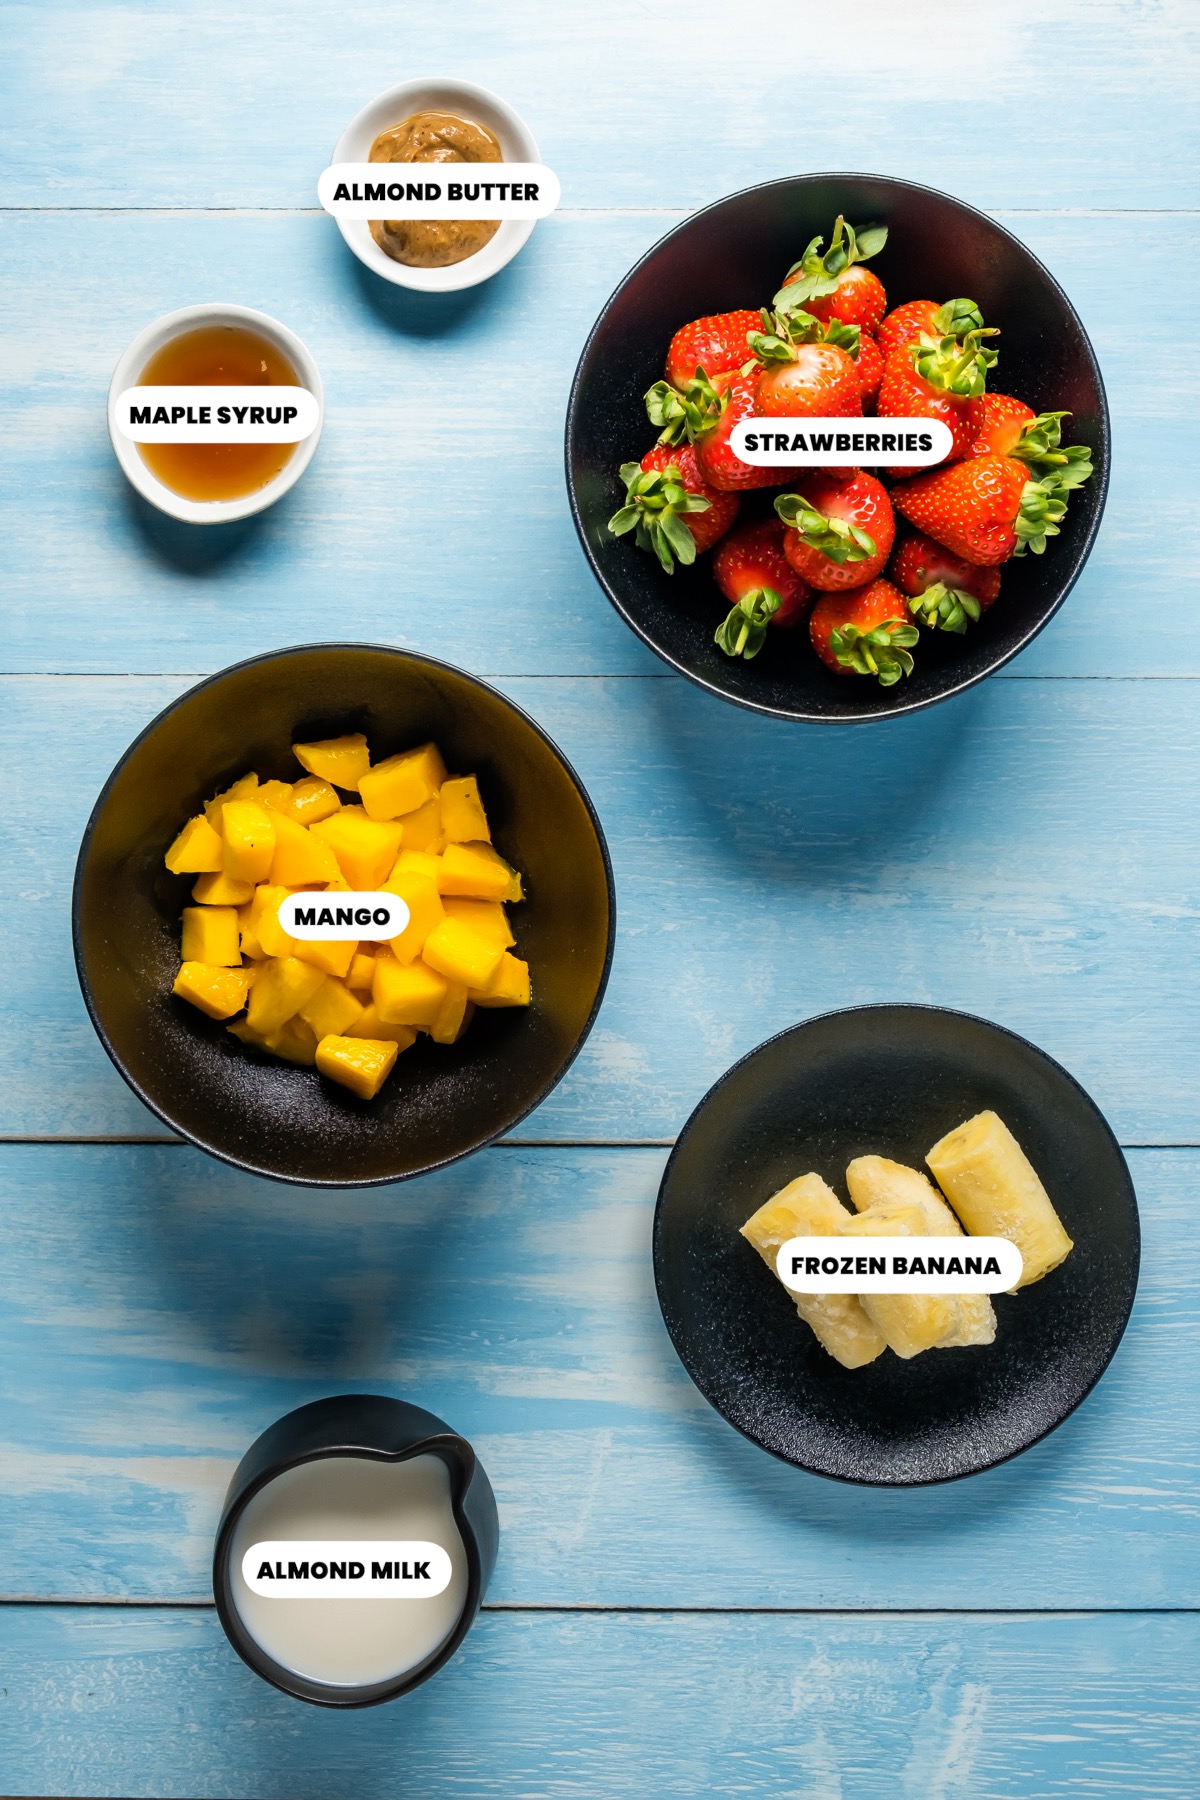 Photo of the ingredients needed to make strawberry mango smoothie.